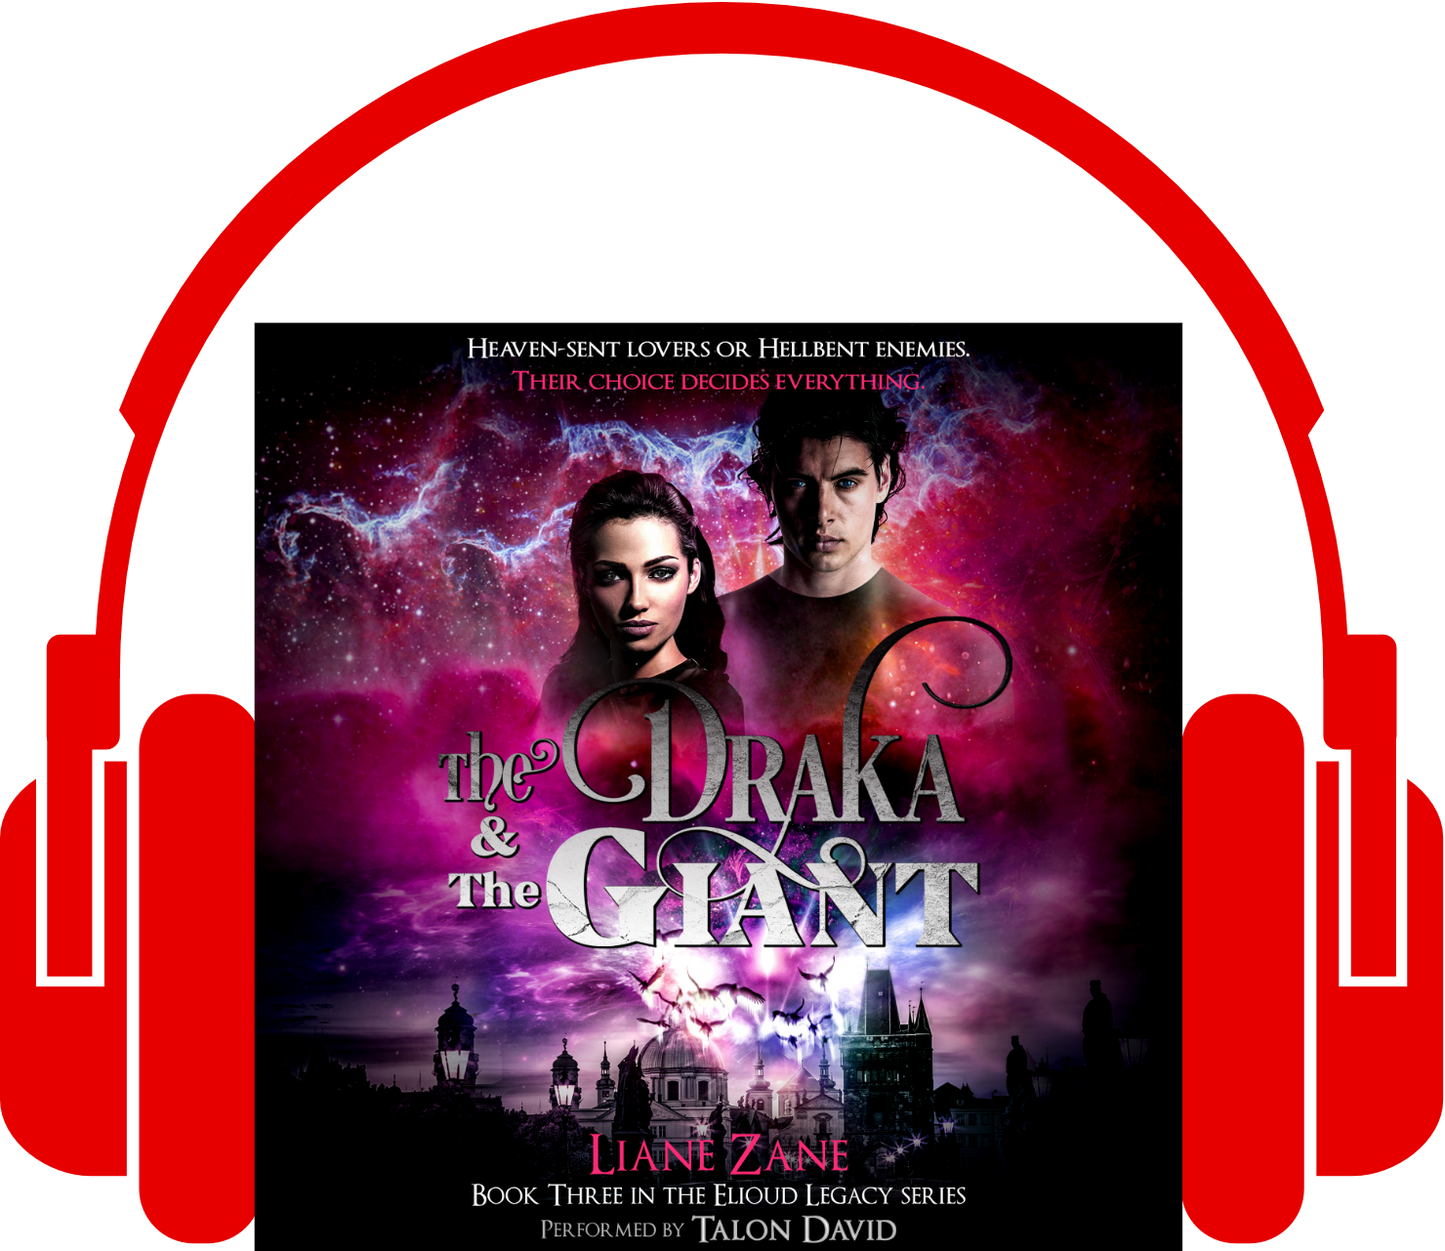 The Draka & The Giant (The Elioud Legacy Book 3)